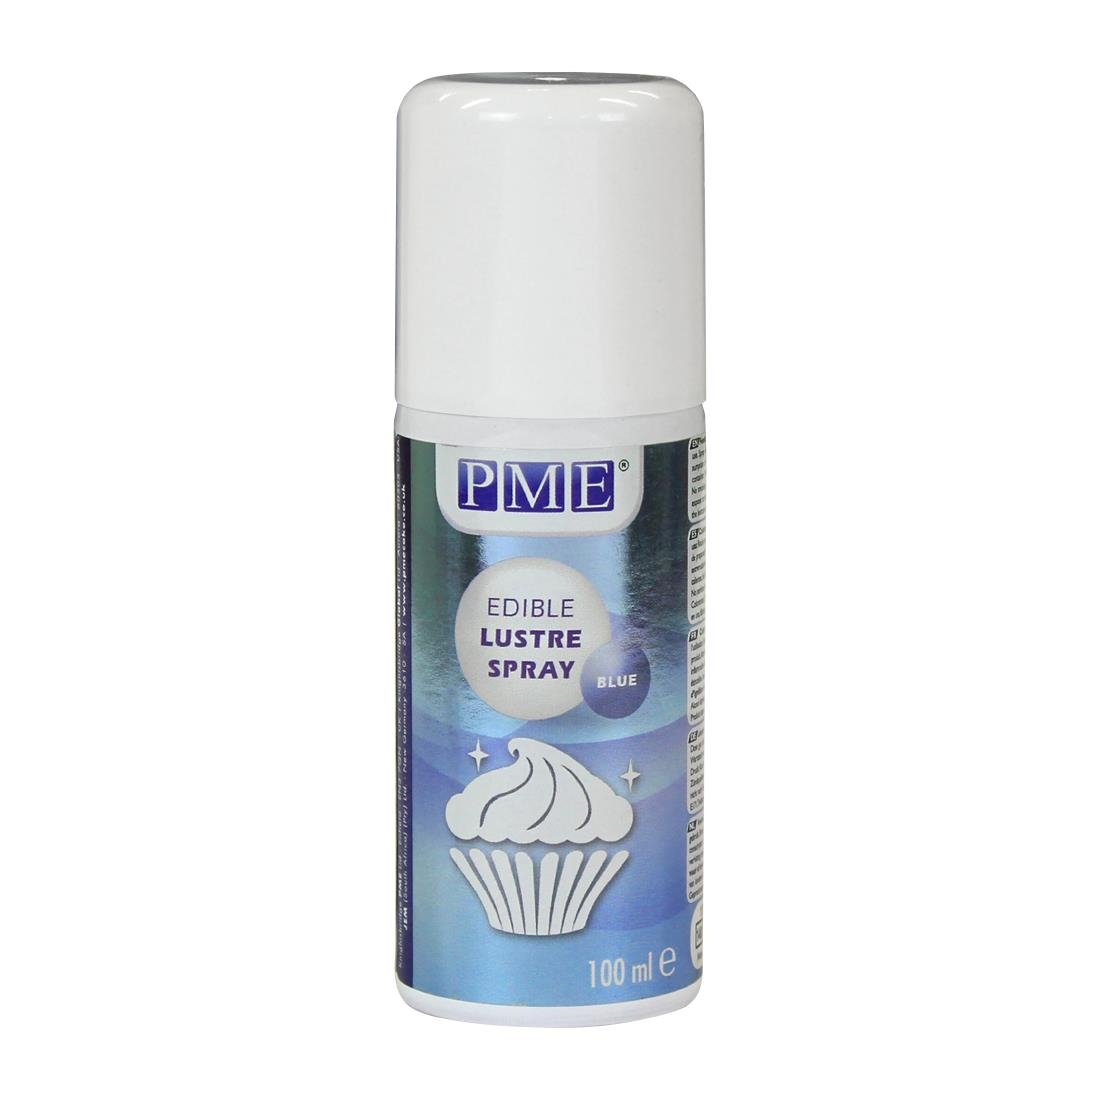 PME Edible Lustre Spray 100ml - Blue (HU202)